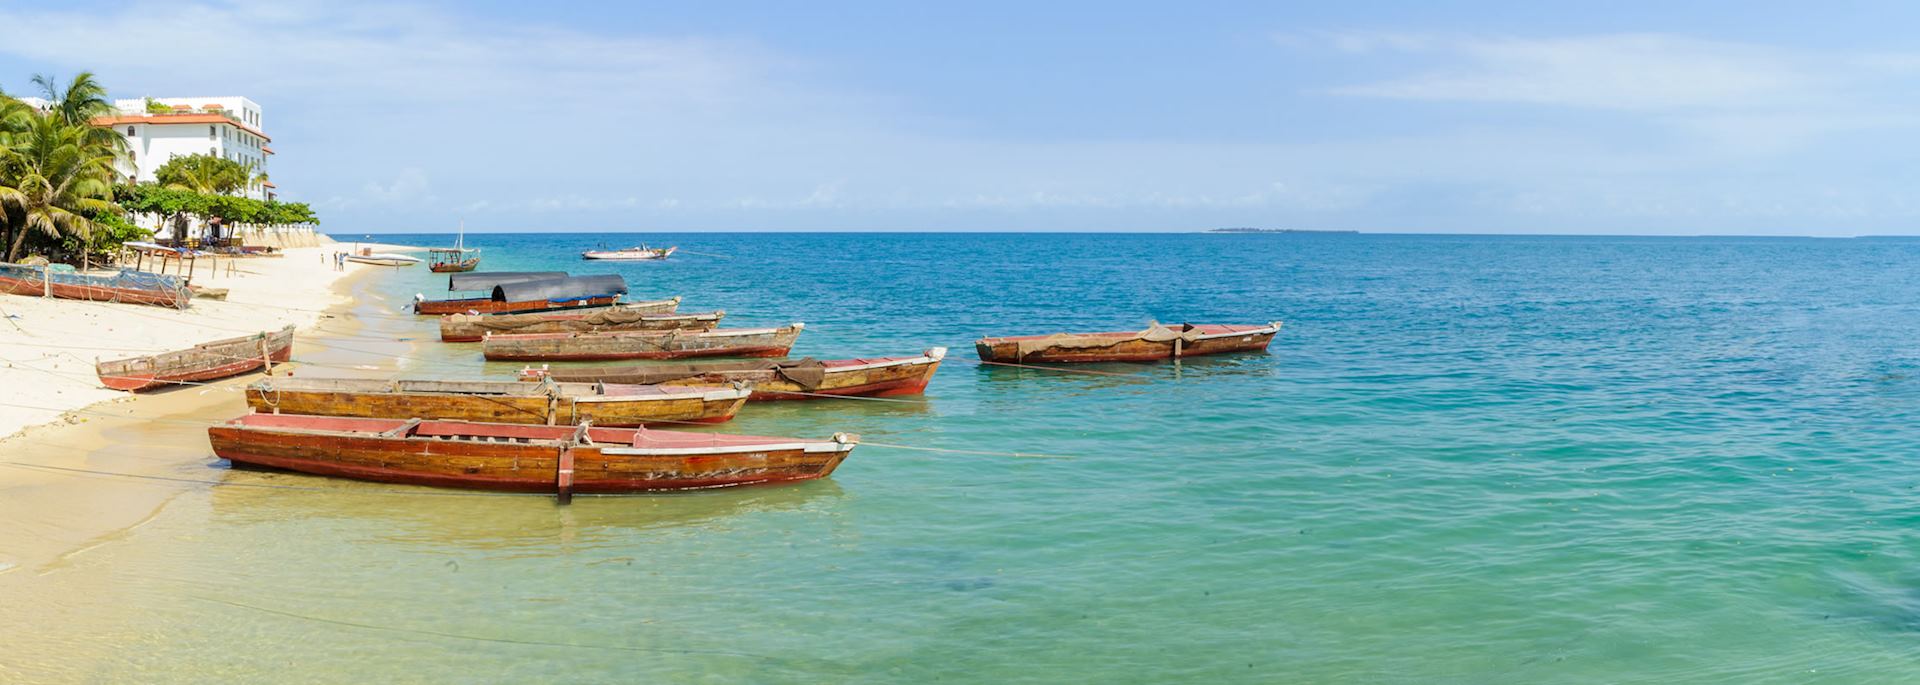 Boats on Tanzania's Swahili Coast